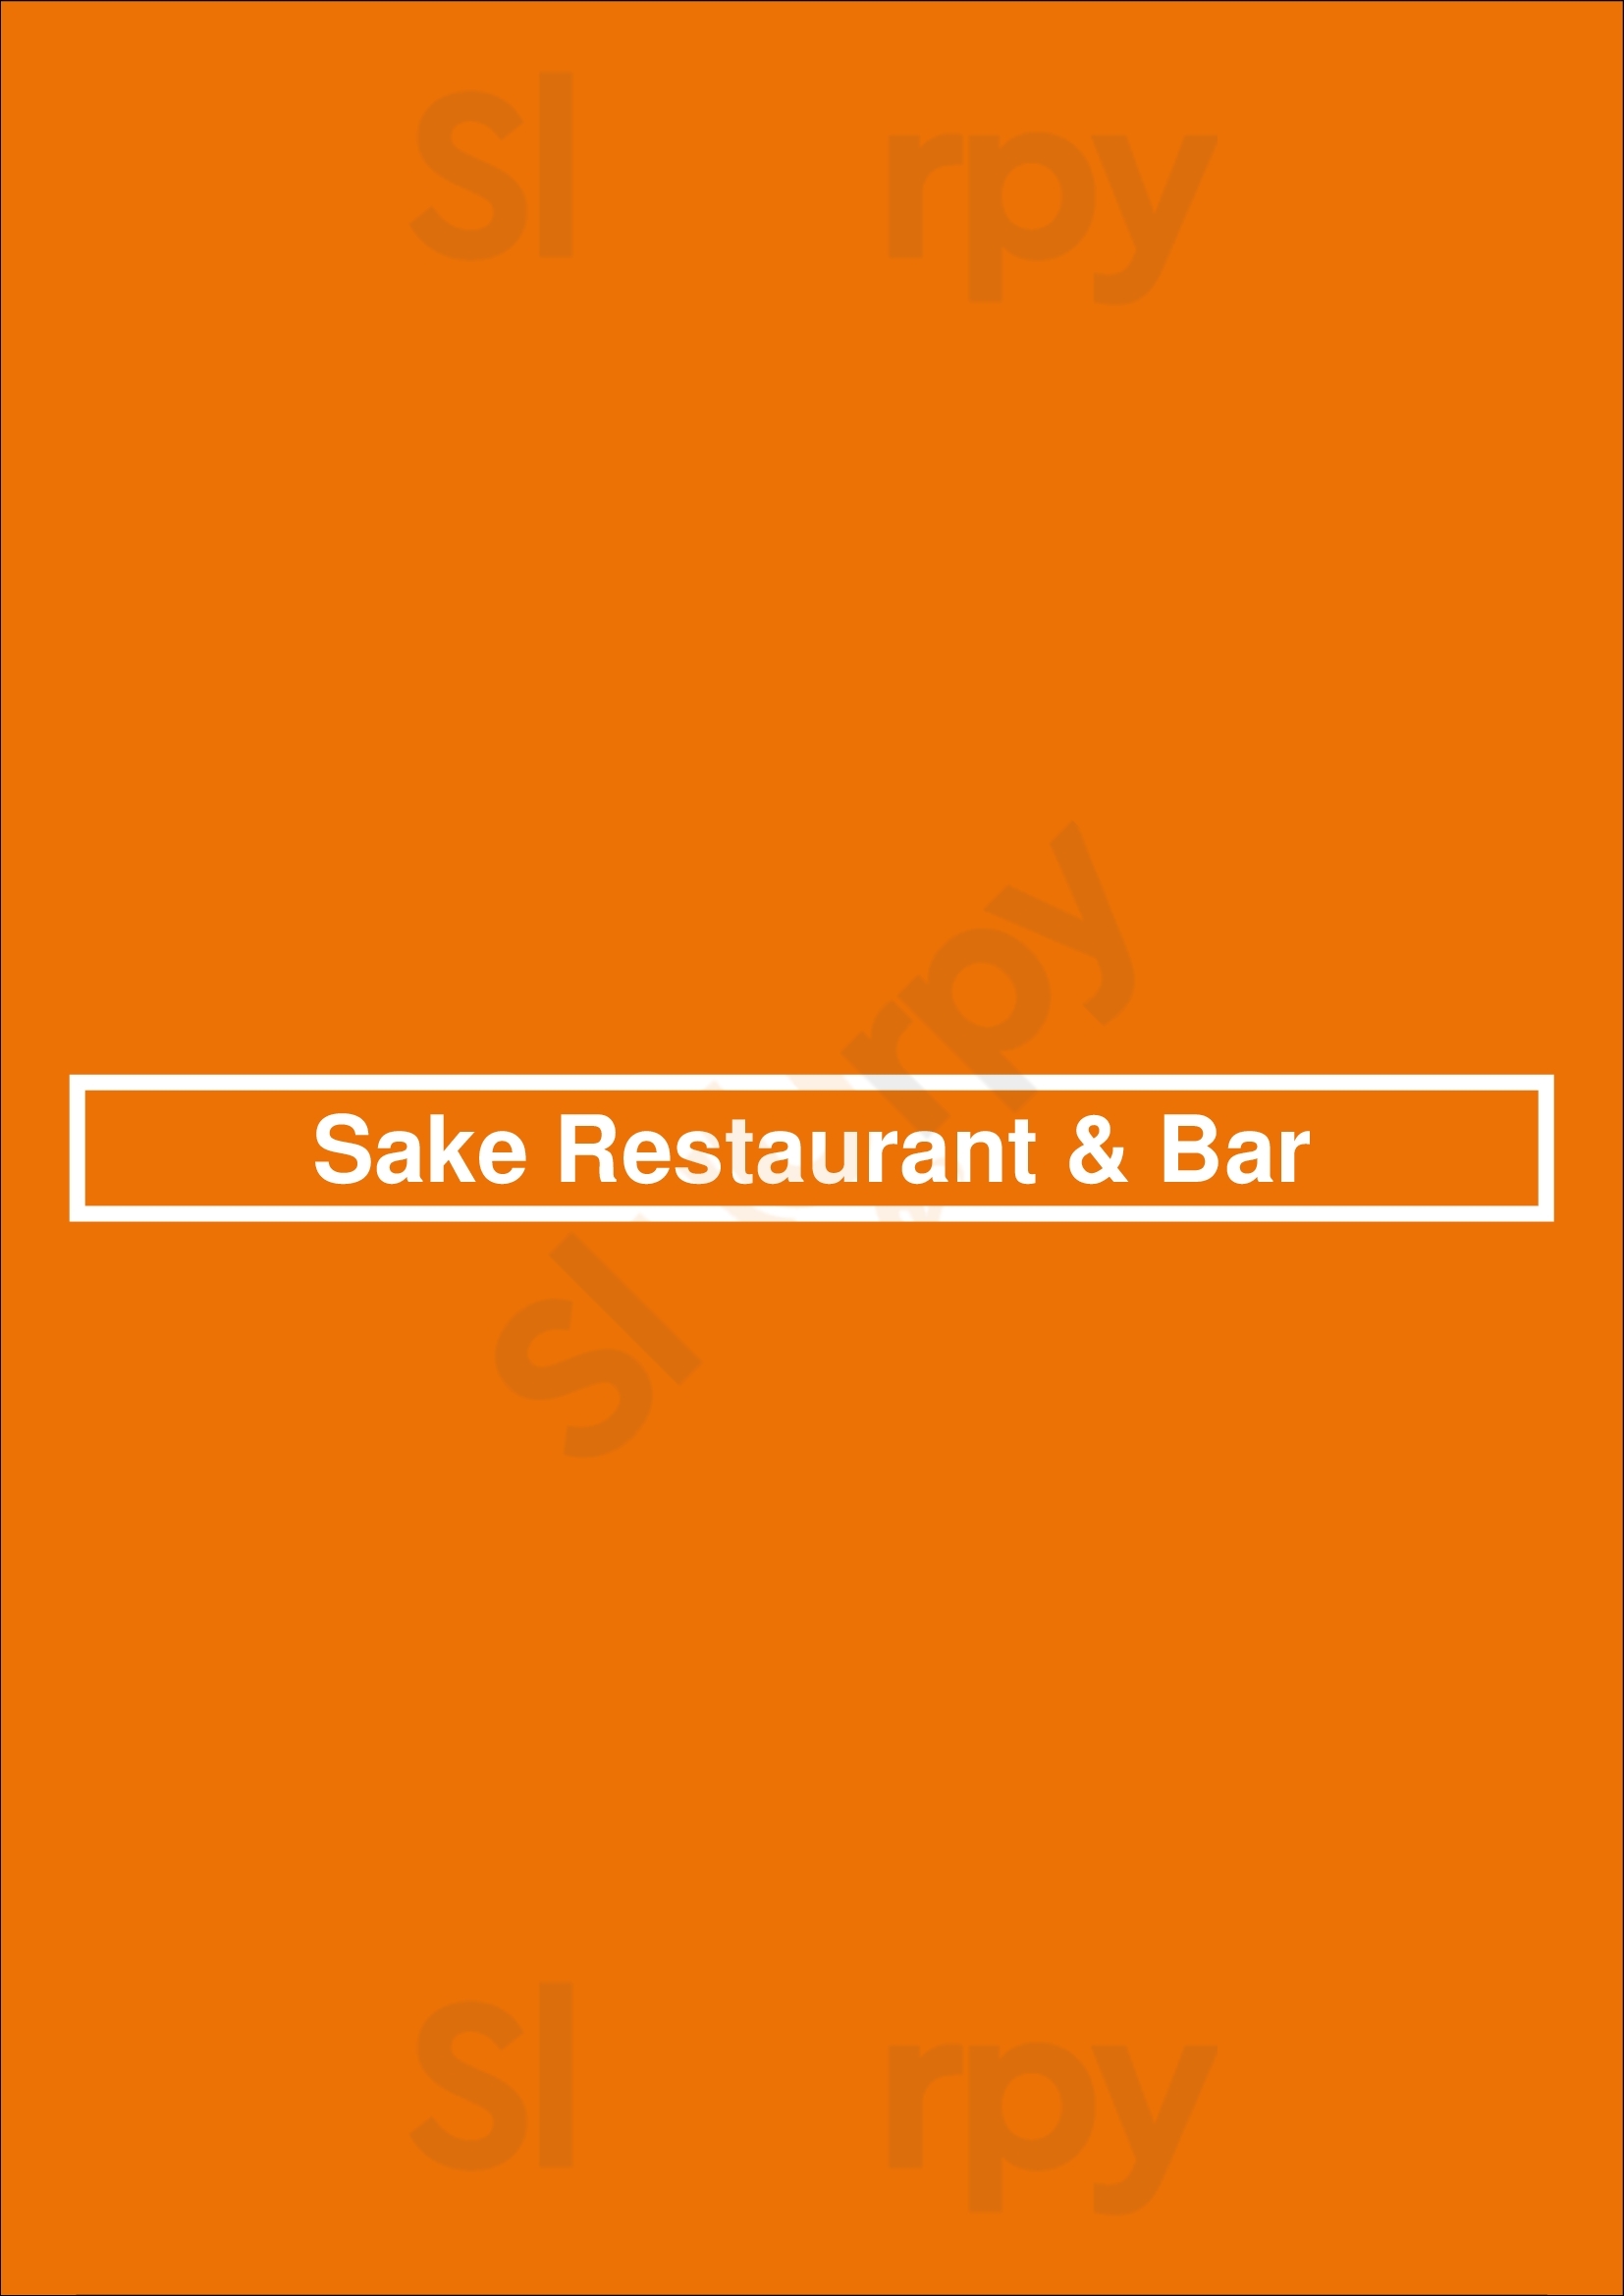 Sake Restaurant & Bar Melbourne Menu - 1